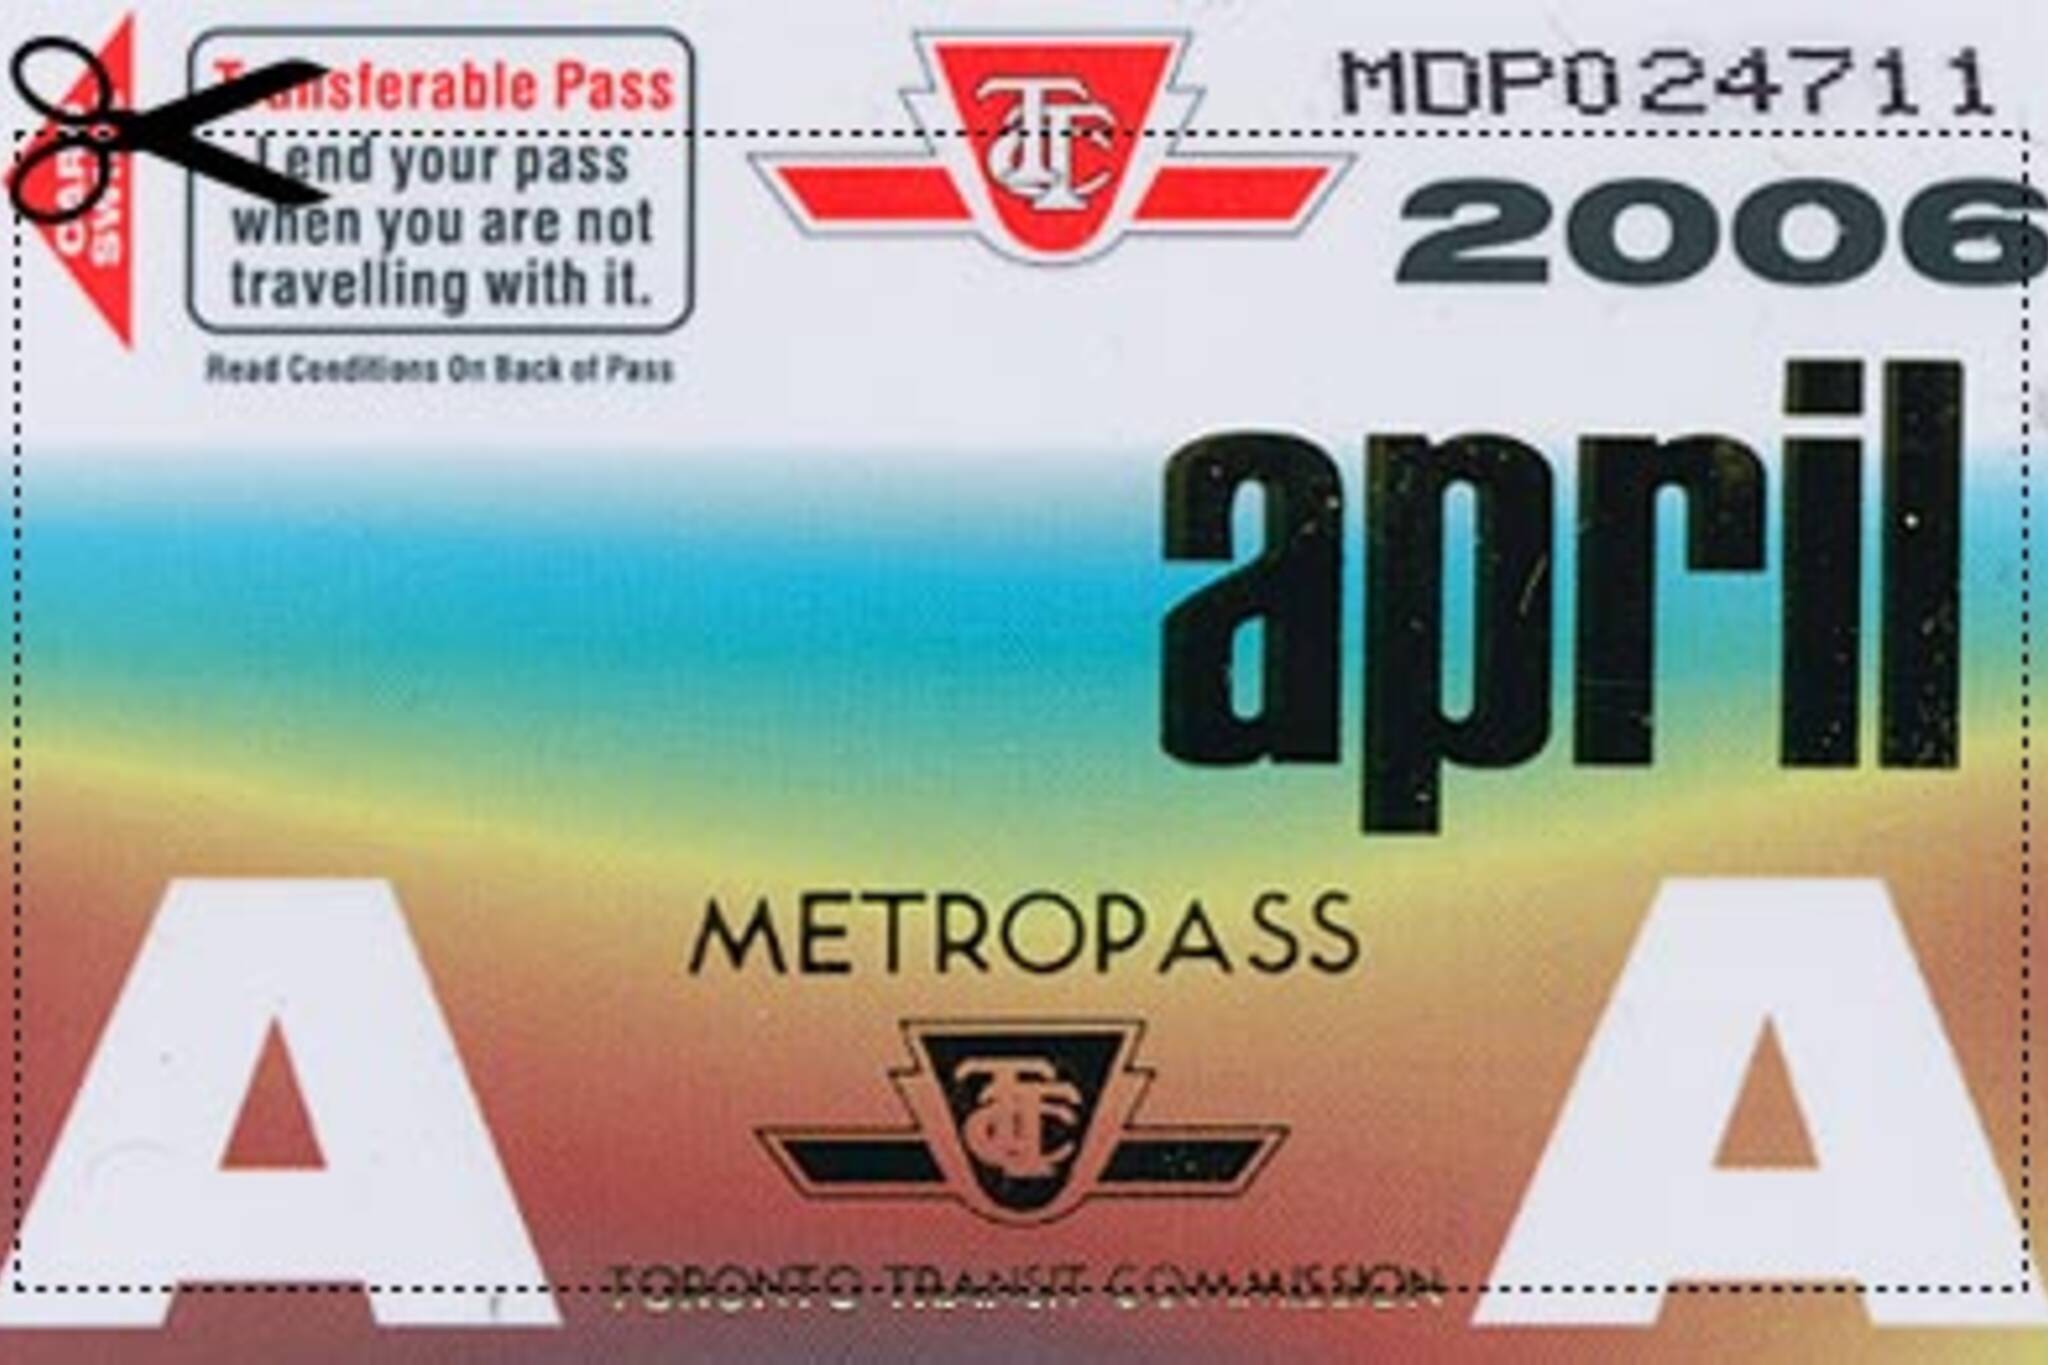 Metropass Affinity Program